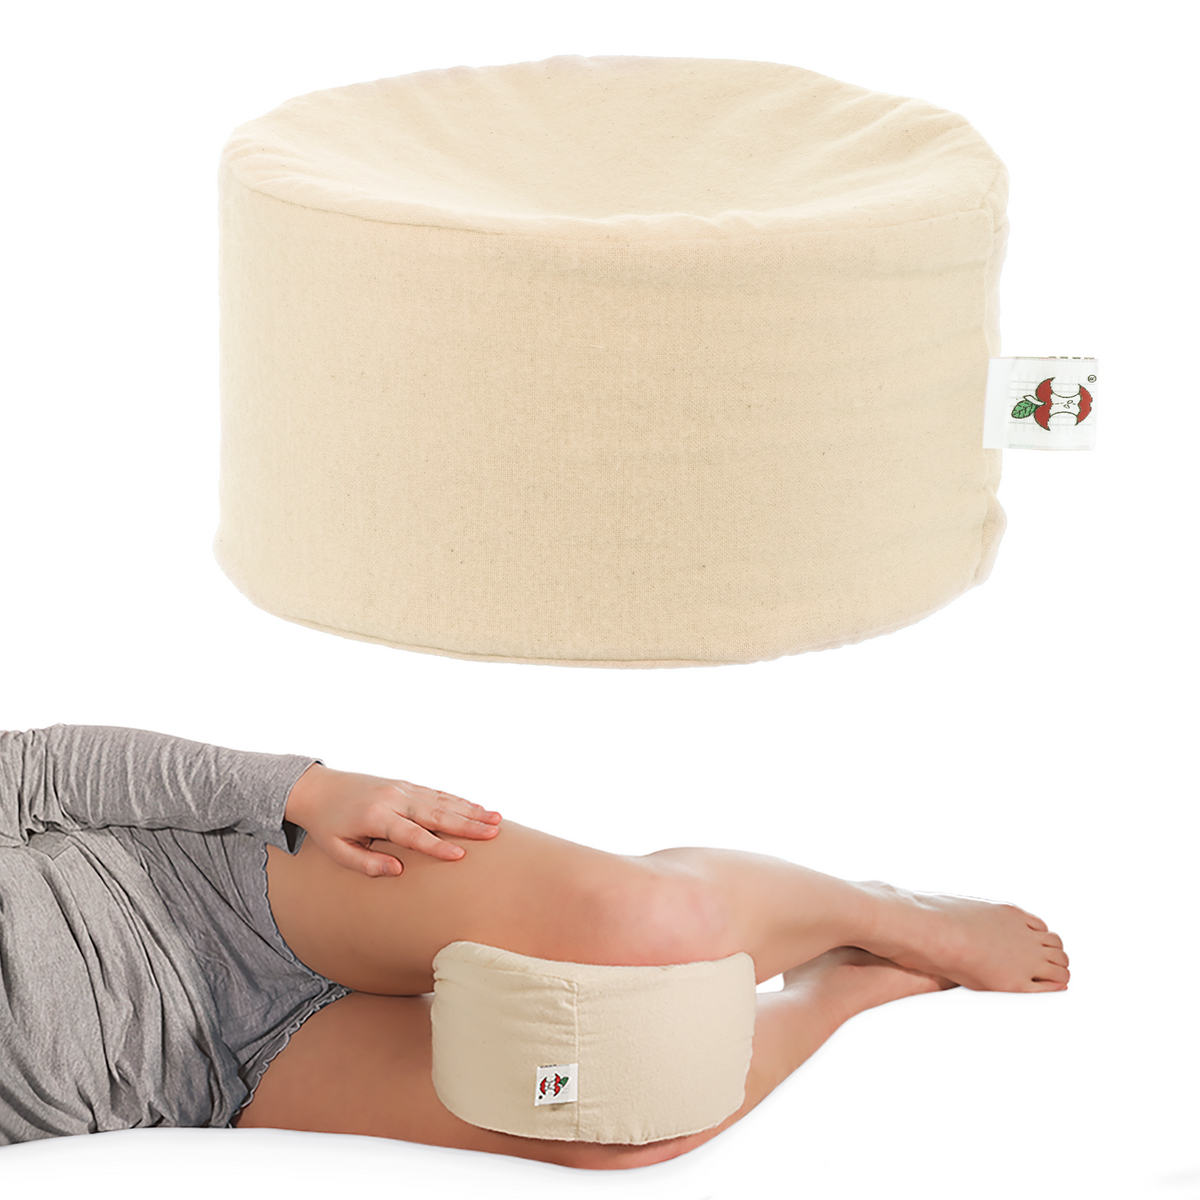 The Original Wonder Disc Knee Support Spacer Pillow